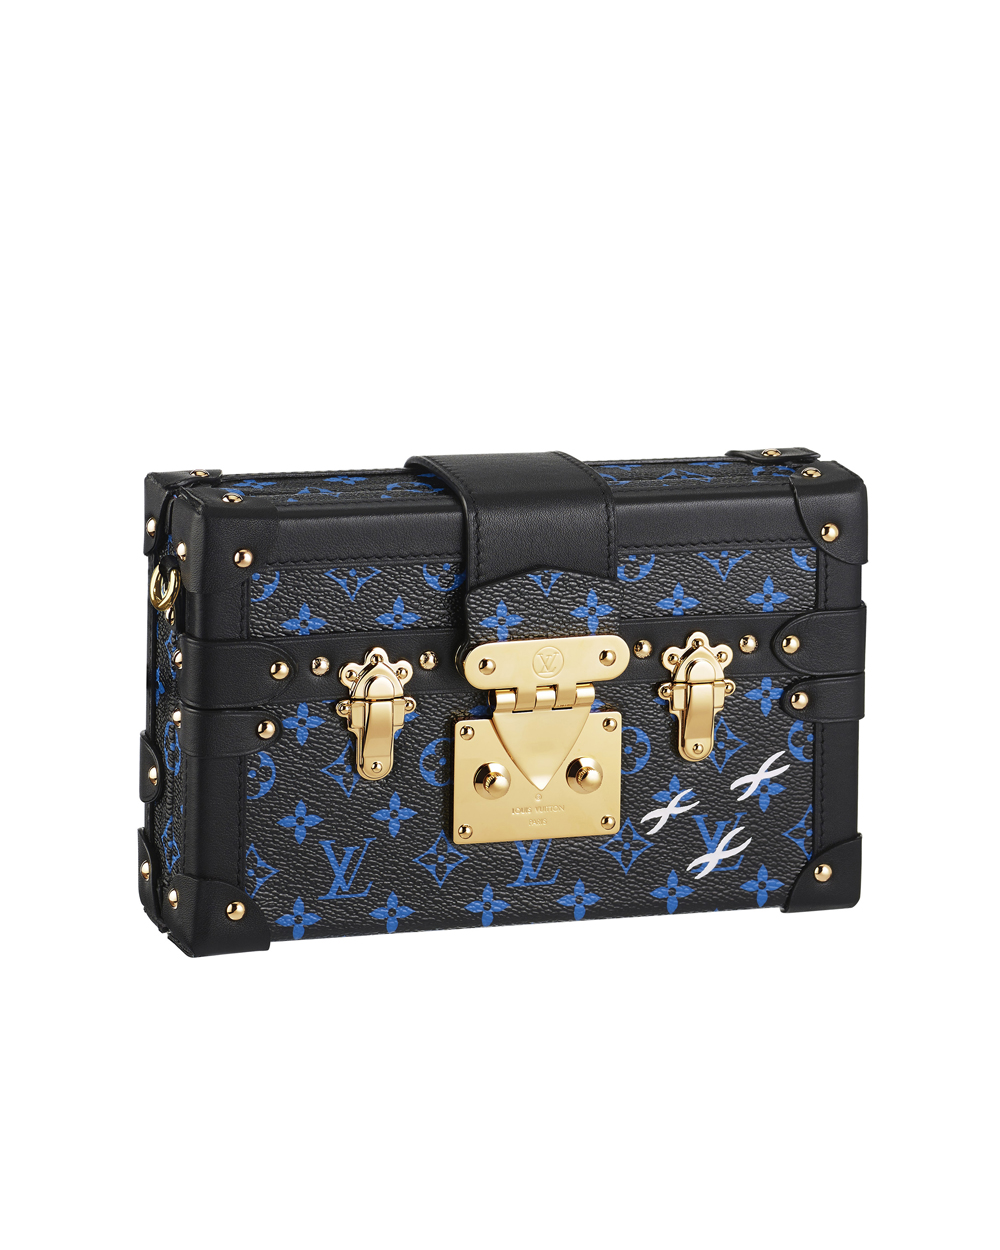 Bag, $8,200, by Louis Vuitton.